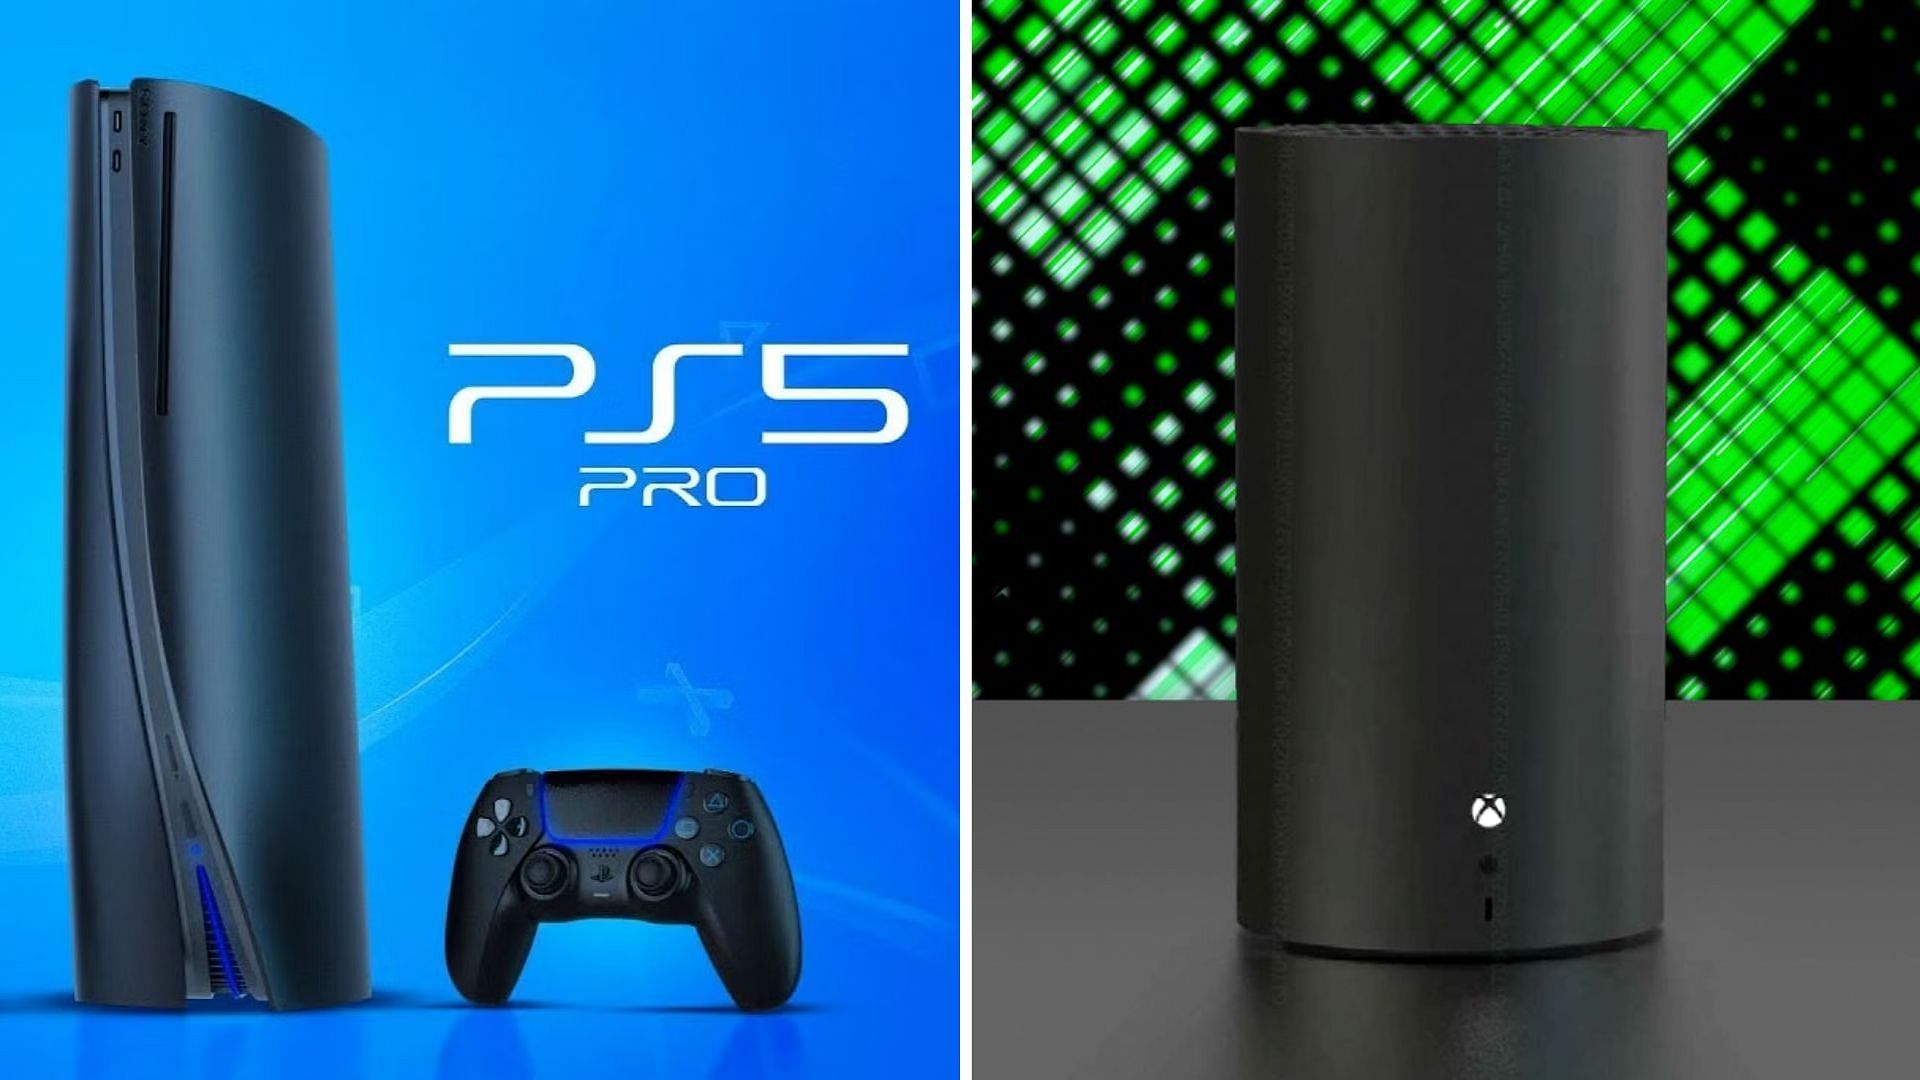 Rumor: PS5 Pro Specs Potentially Leaked